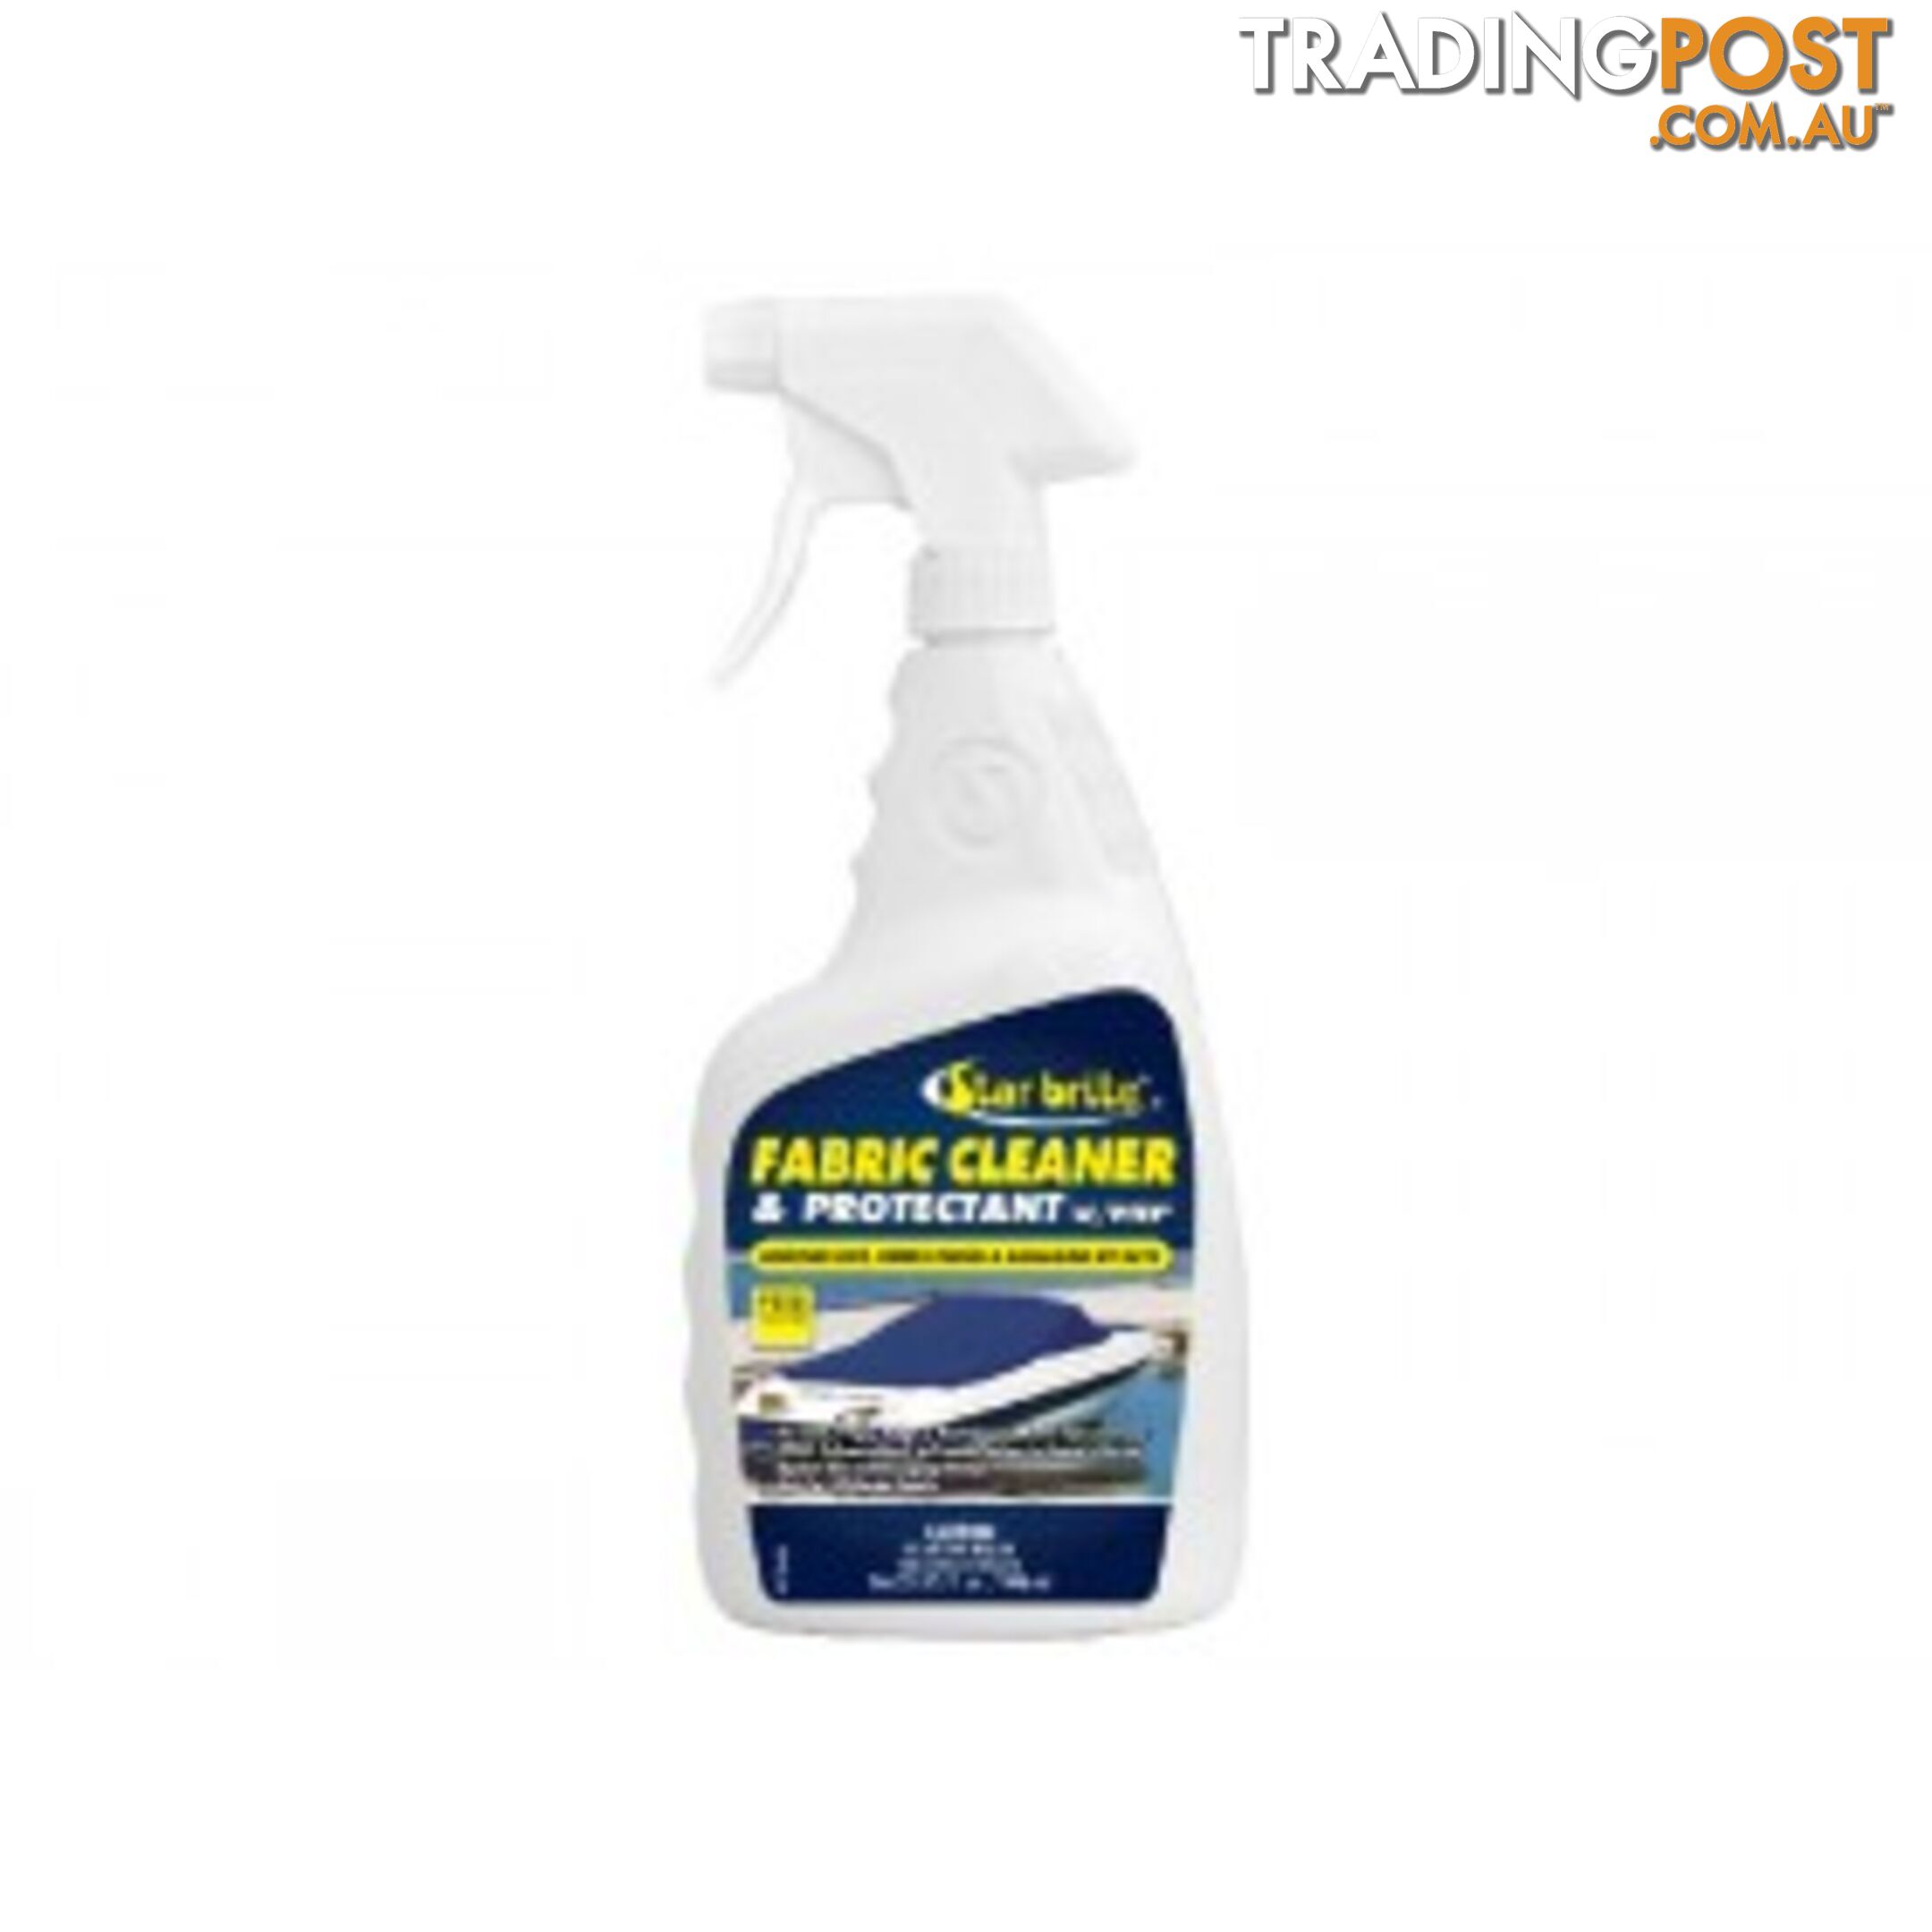 Star briteÂ® Fabric Cleaner & Protectant Spray - 946ml - 265725